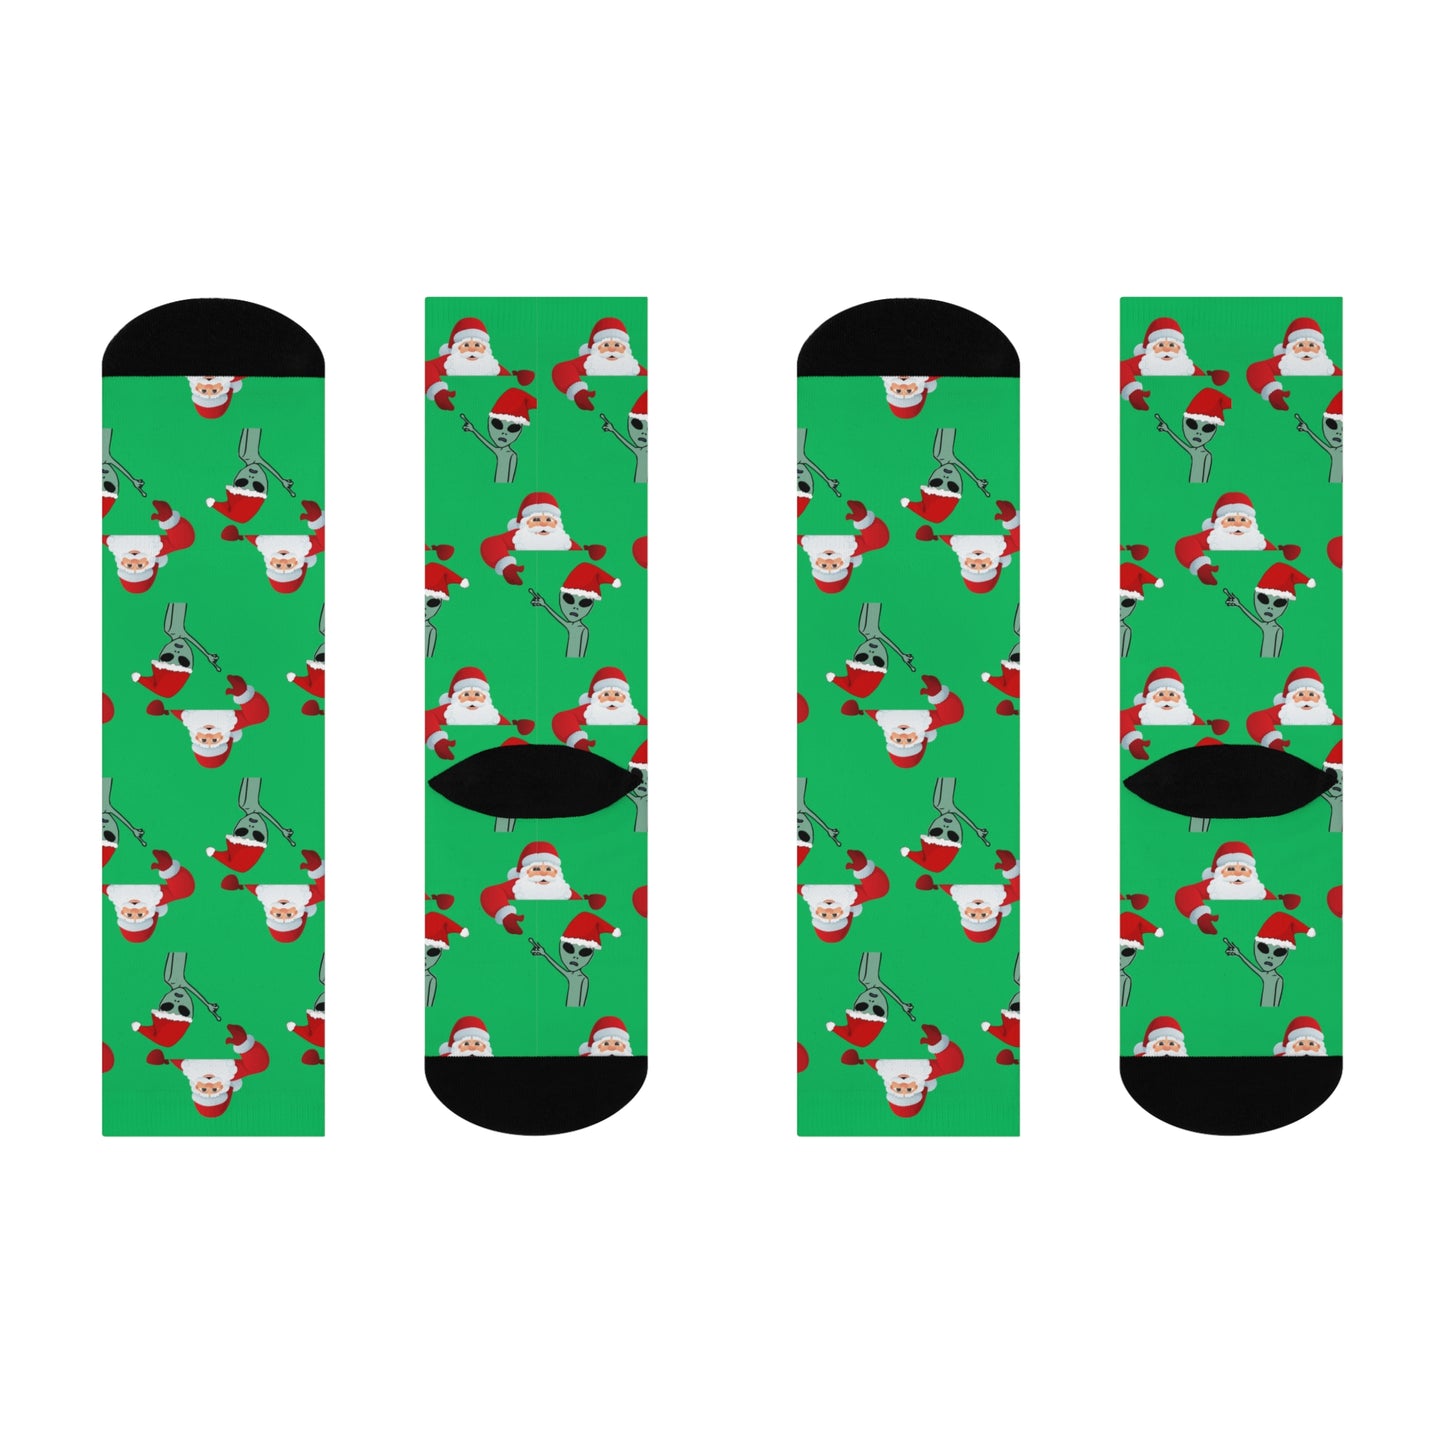 Santa Alien - Christmas UFO Fun Novelty Holiday Socks